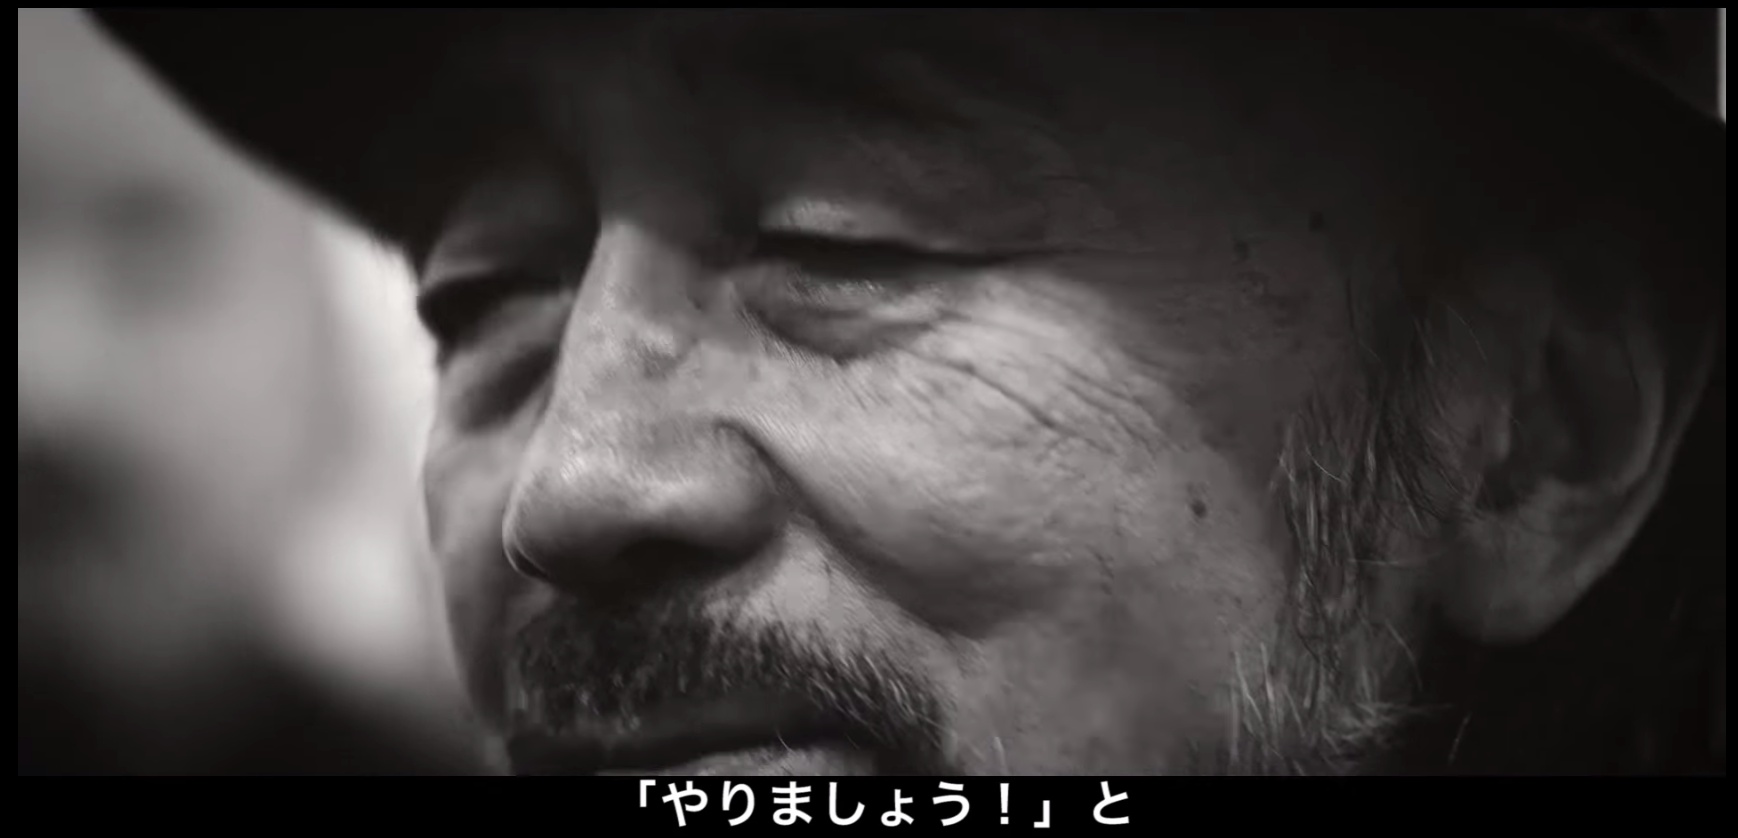 Yohji Yamamoto is the ‘Master of the Shadows’